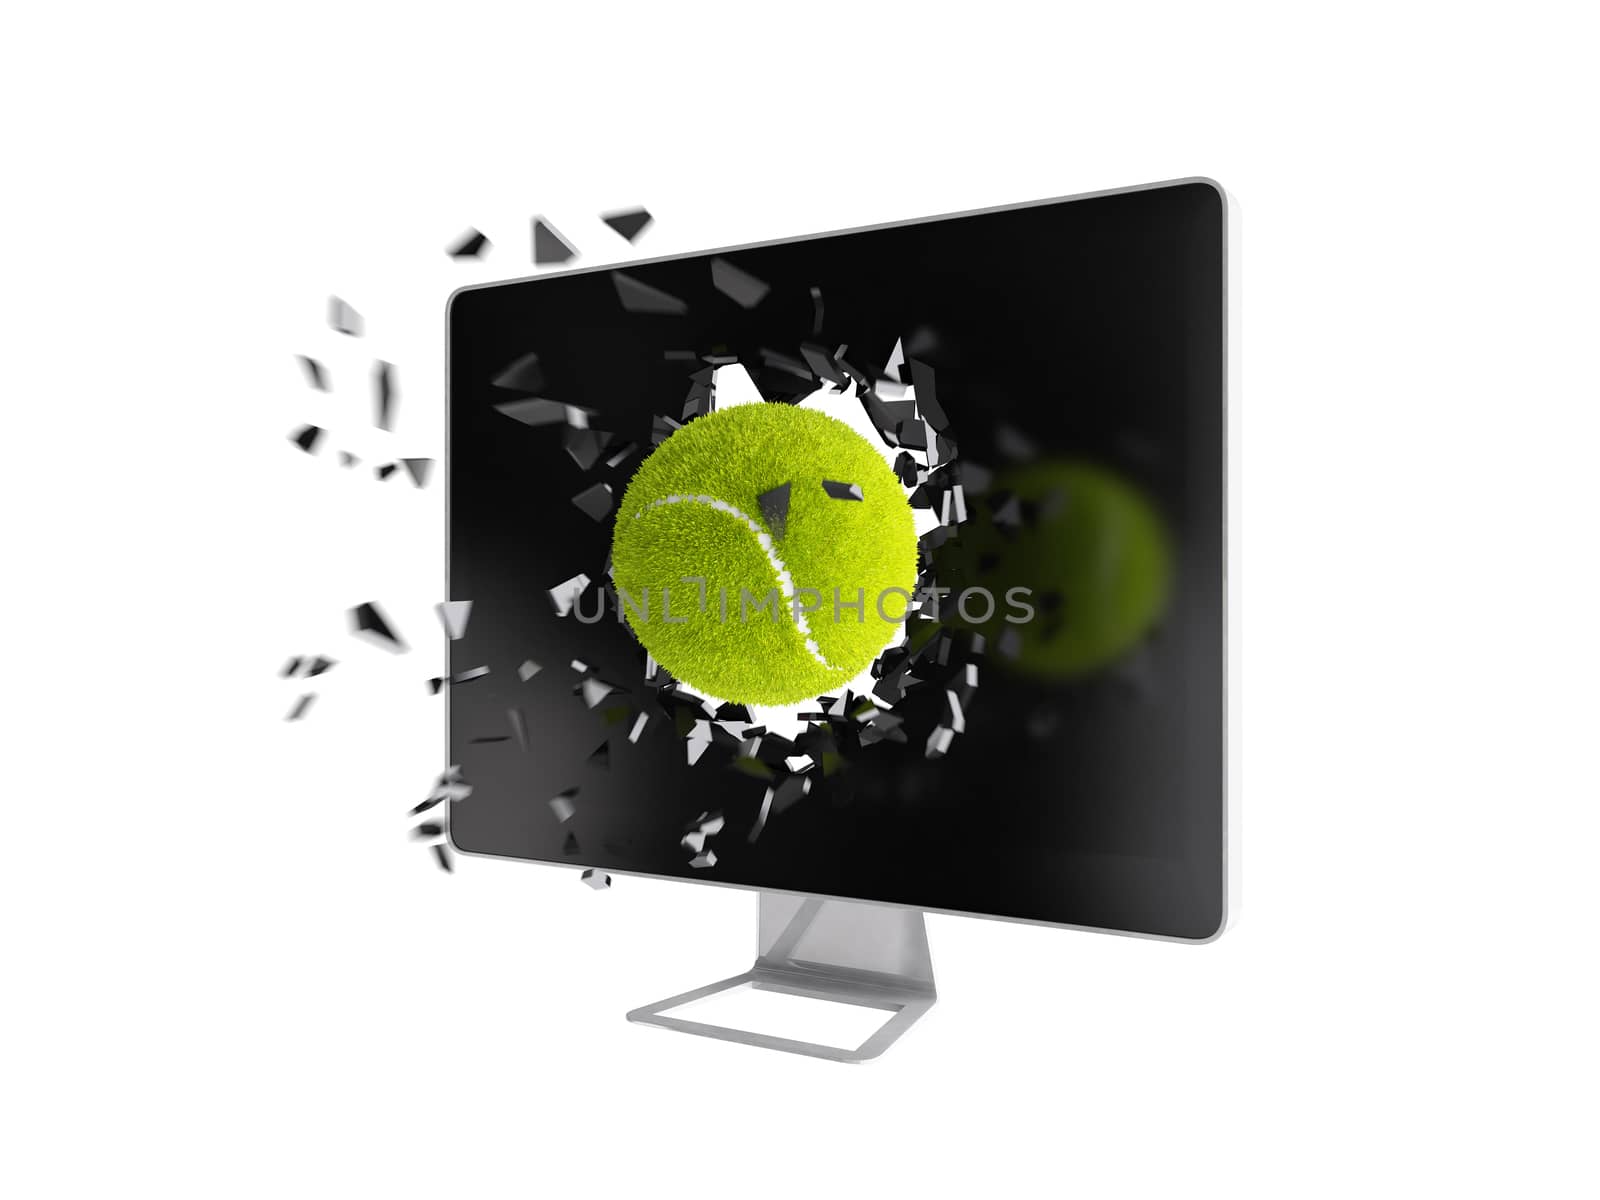 tennis ball destroy computer screen. by teerawit